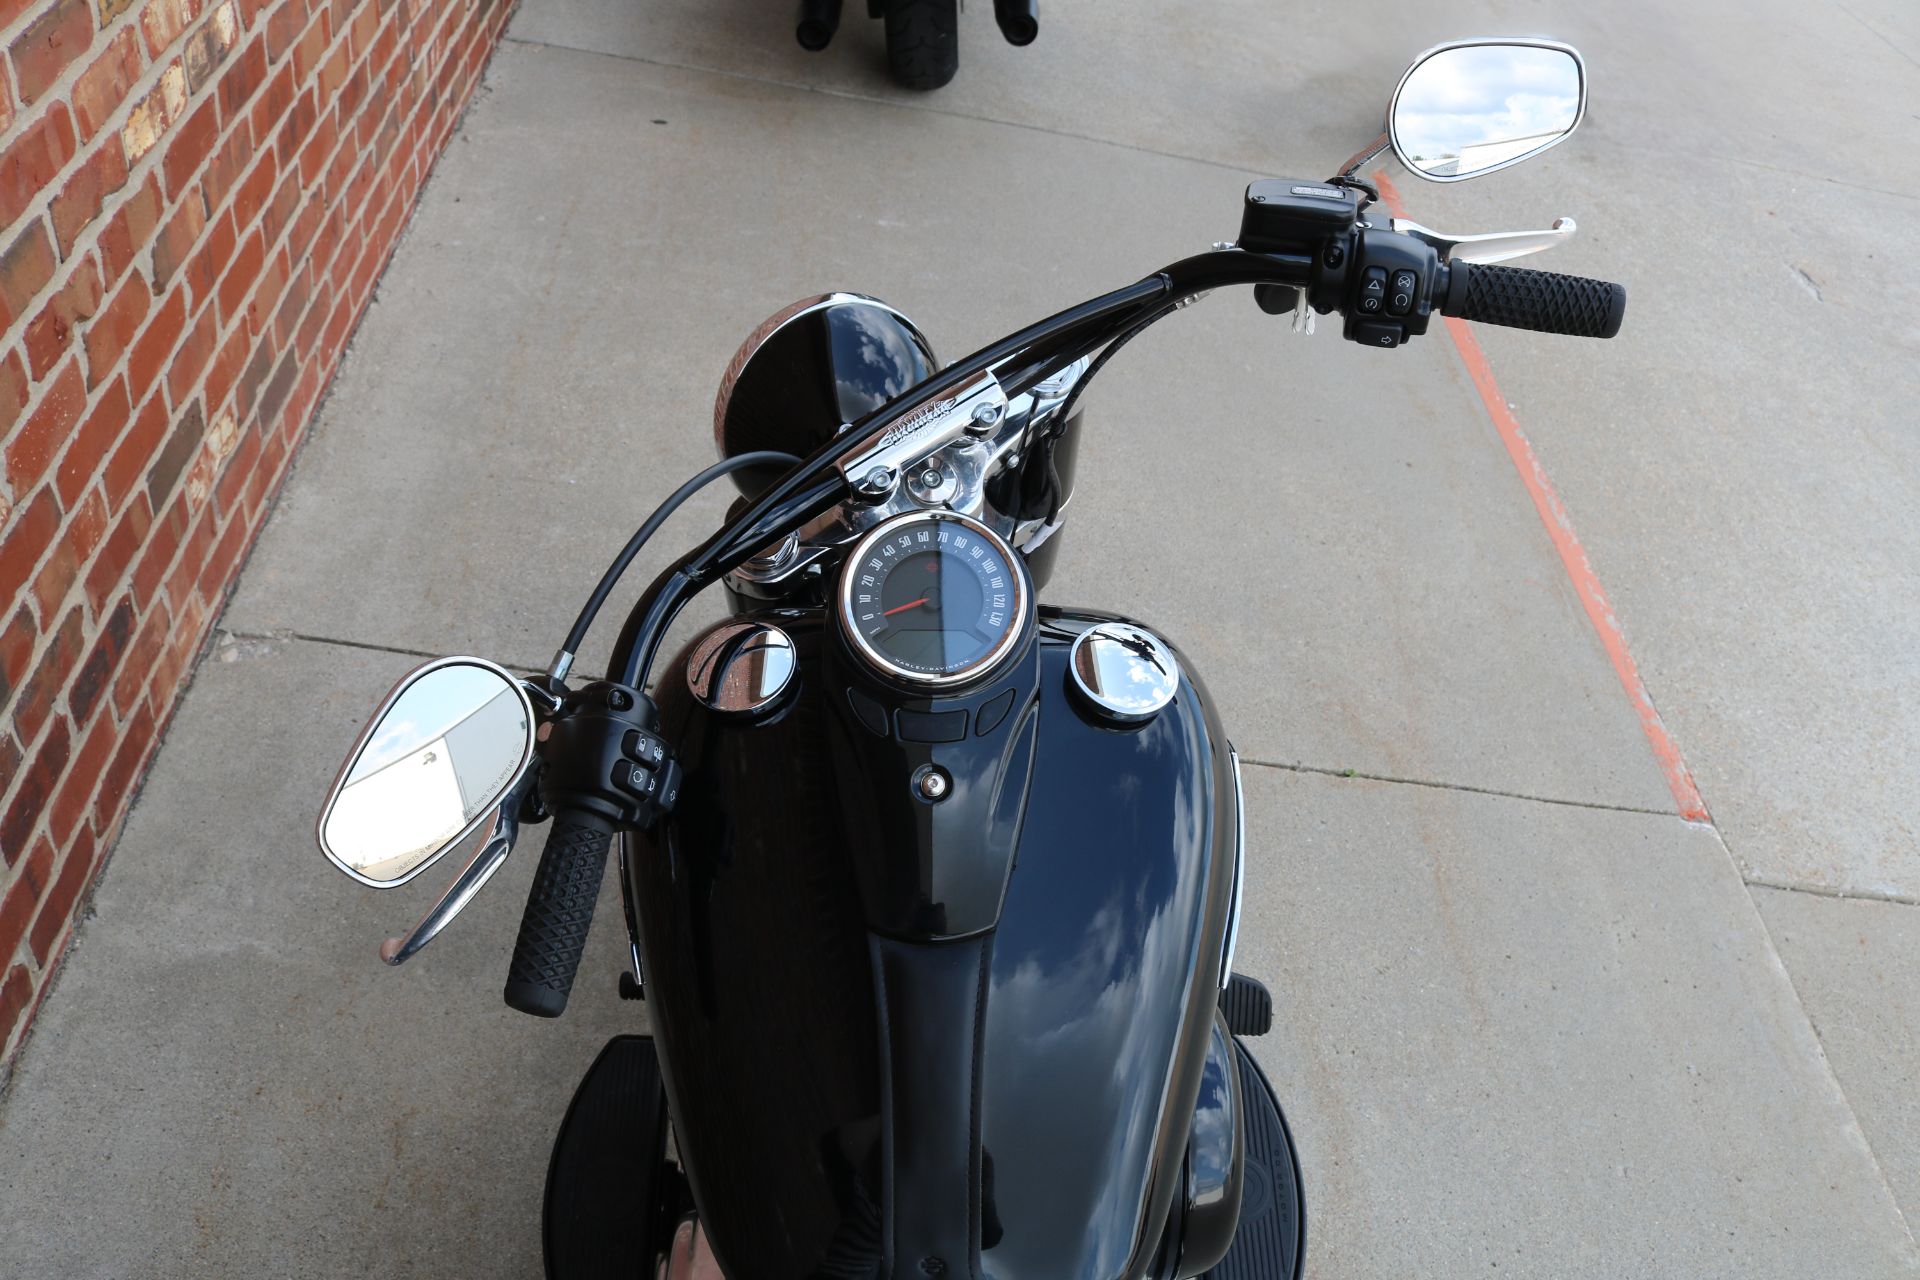 2020 Harley-Davidson Softail Slim® in Ames, Iowa - Photo 9